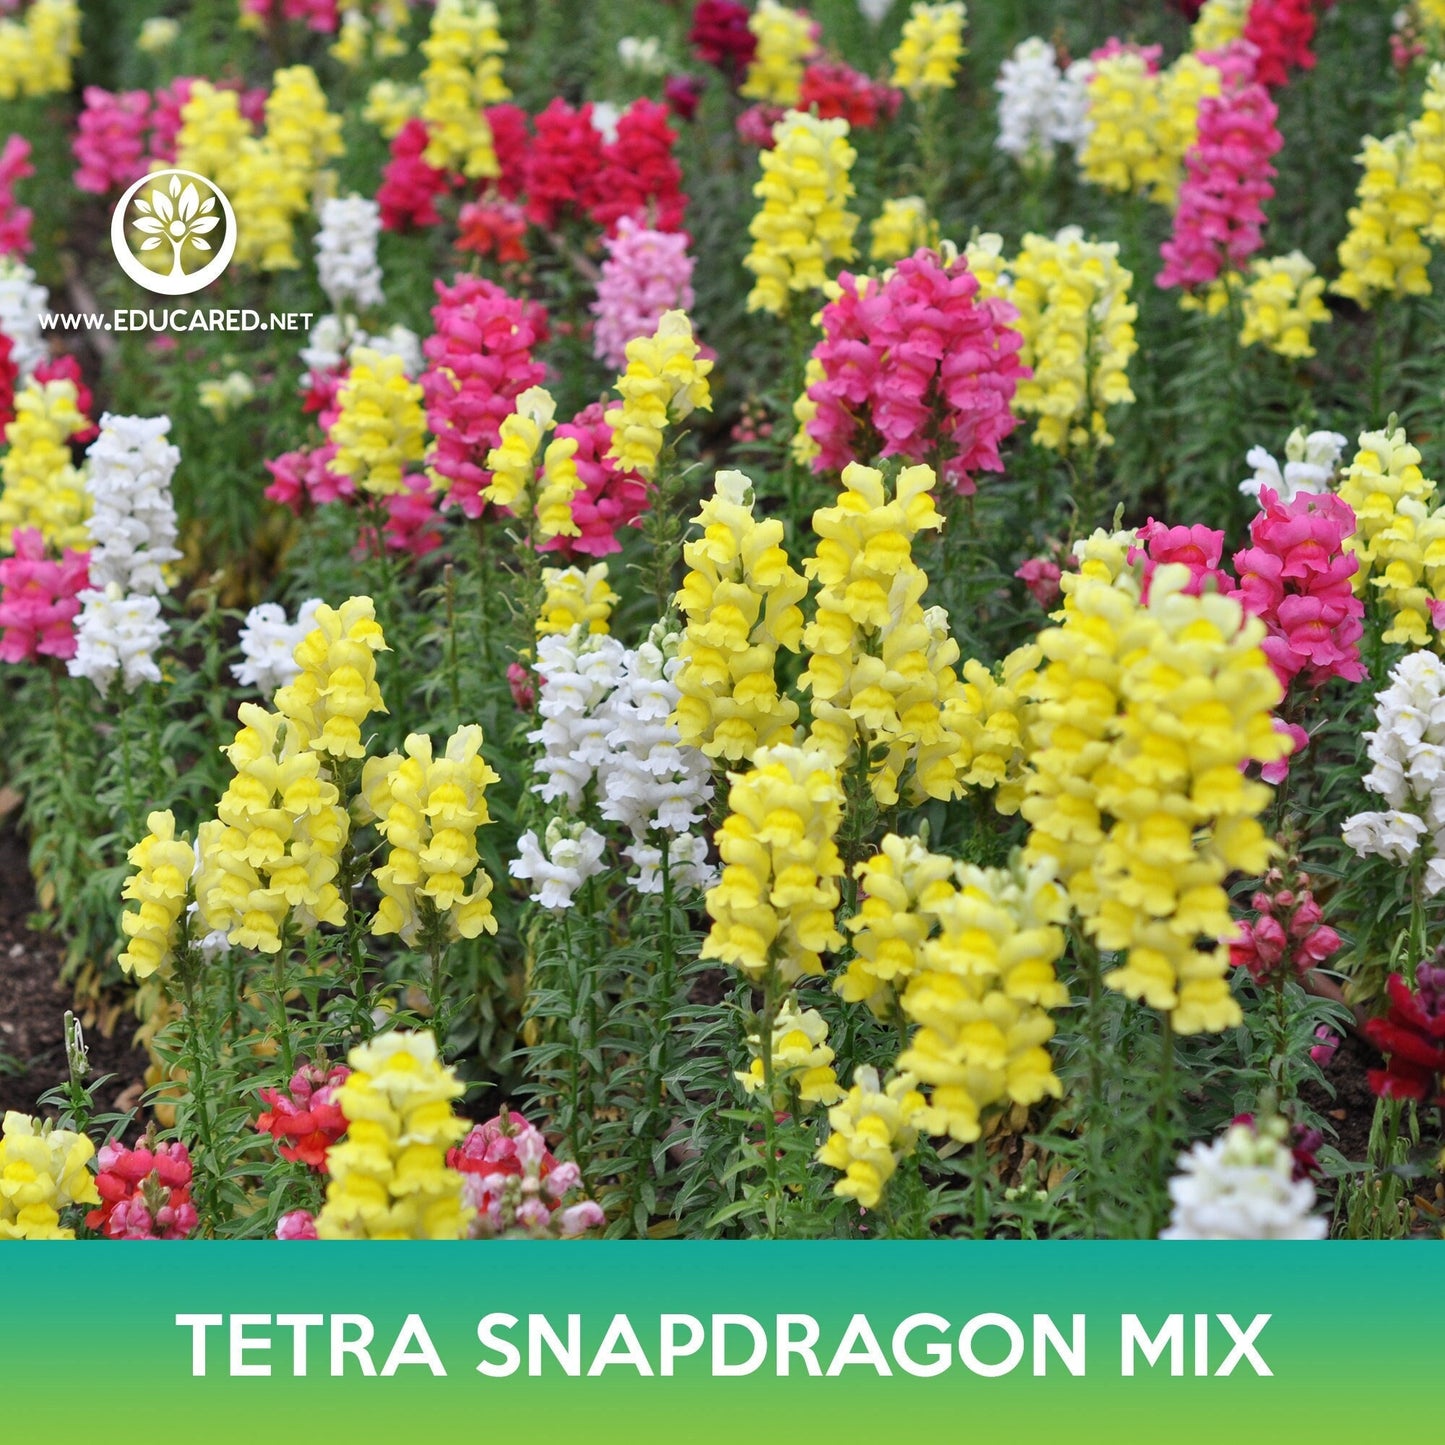 Tetra Snapdragon Mix Seeds, Antirrhinum majus